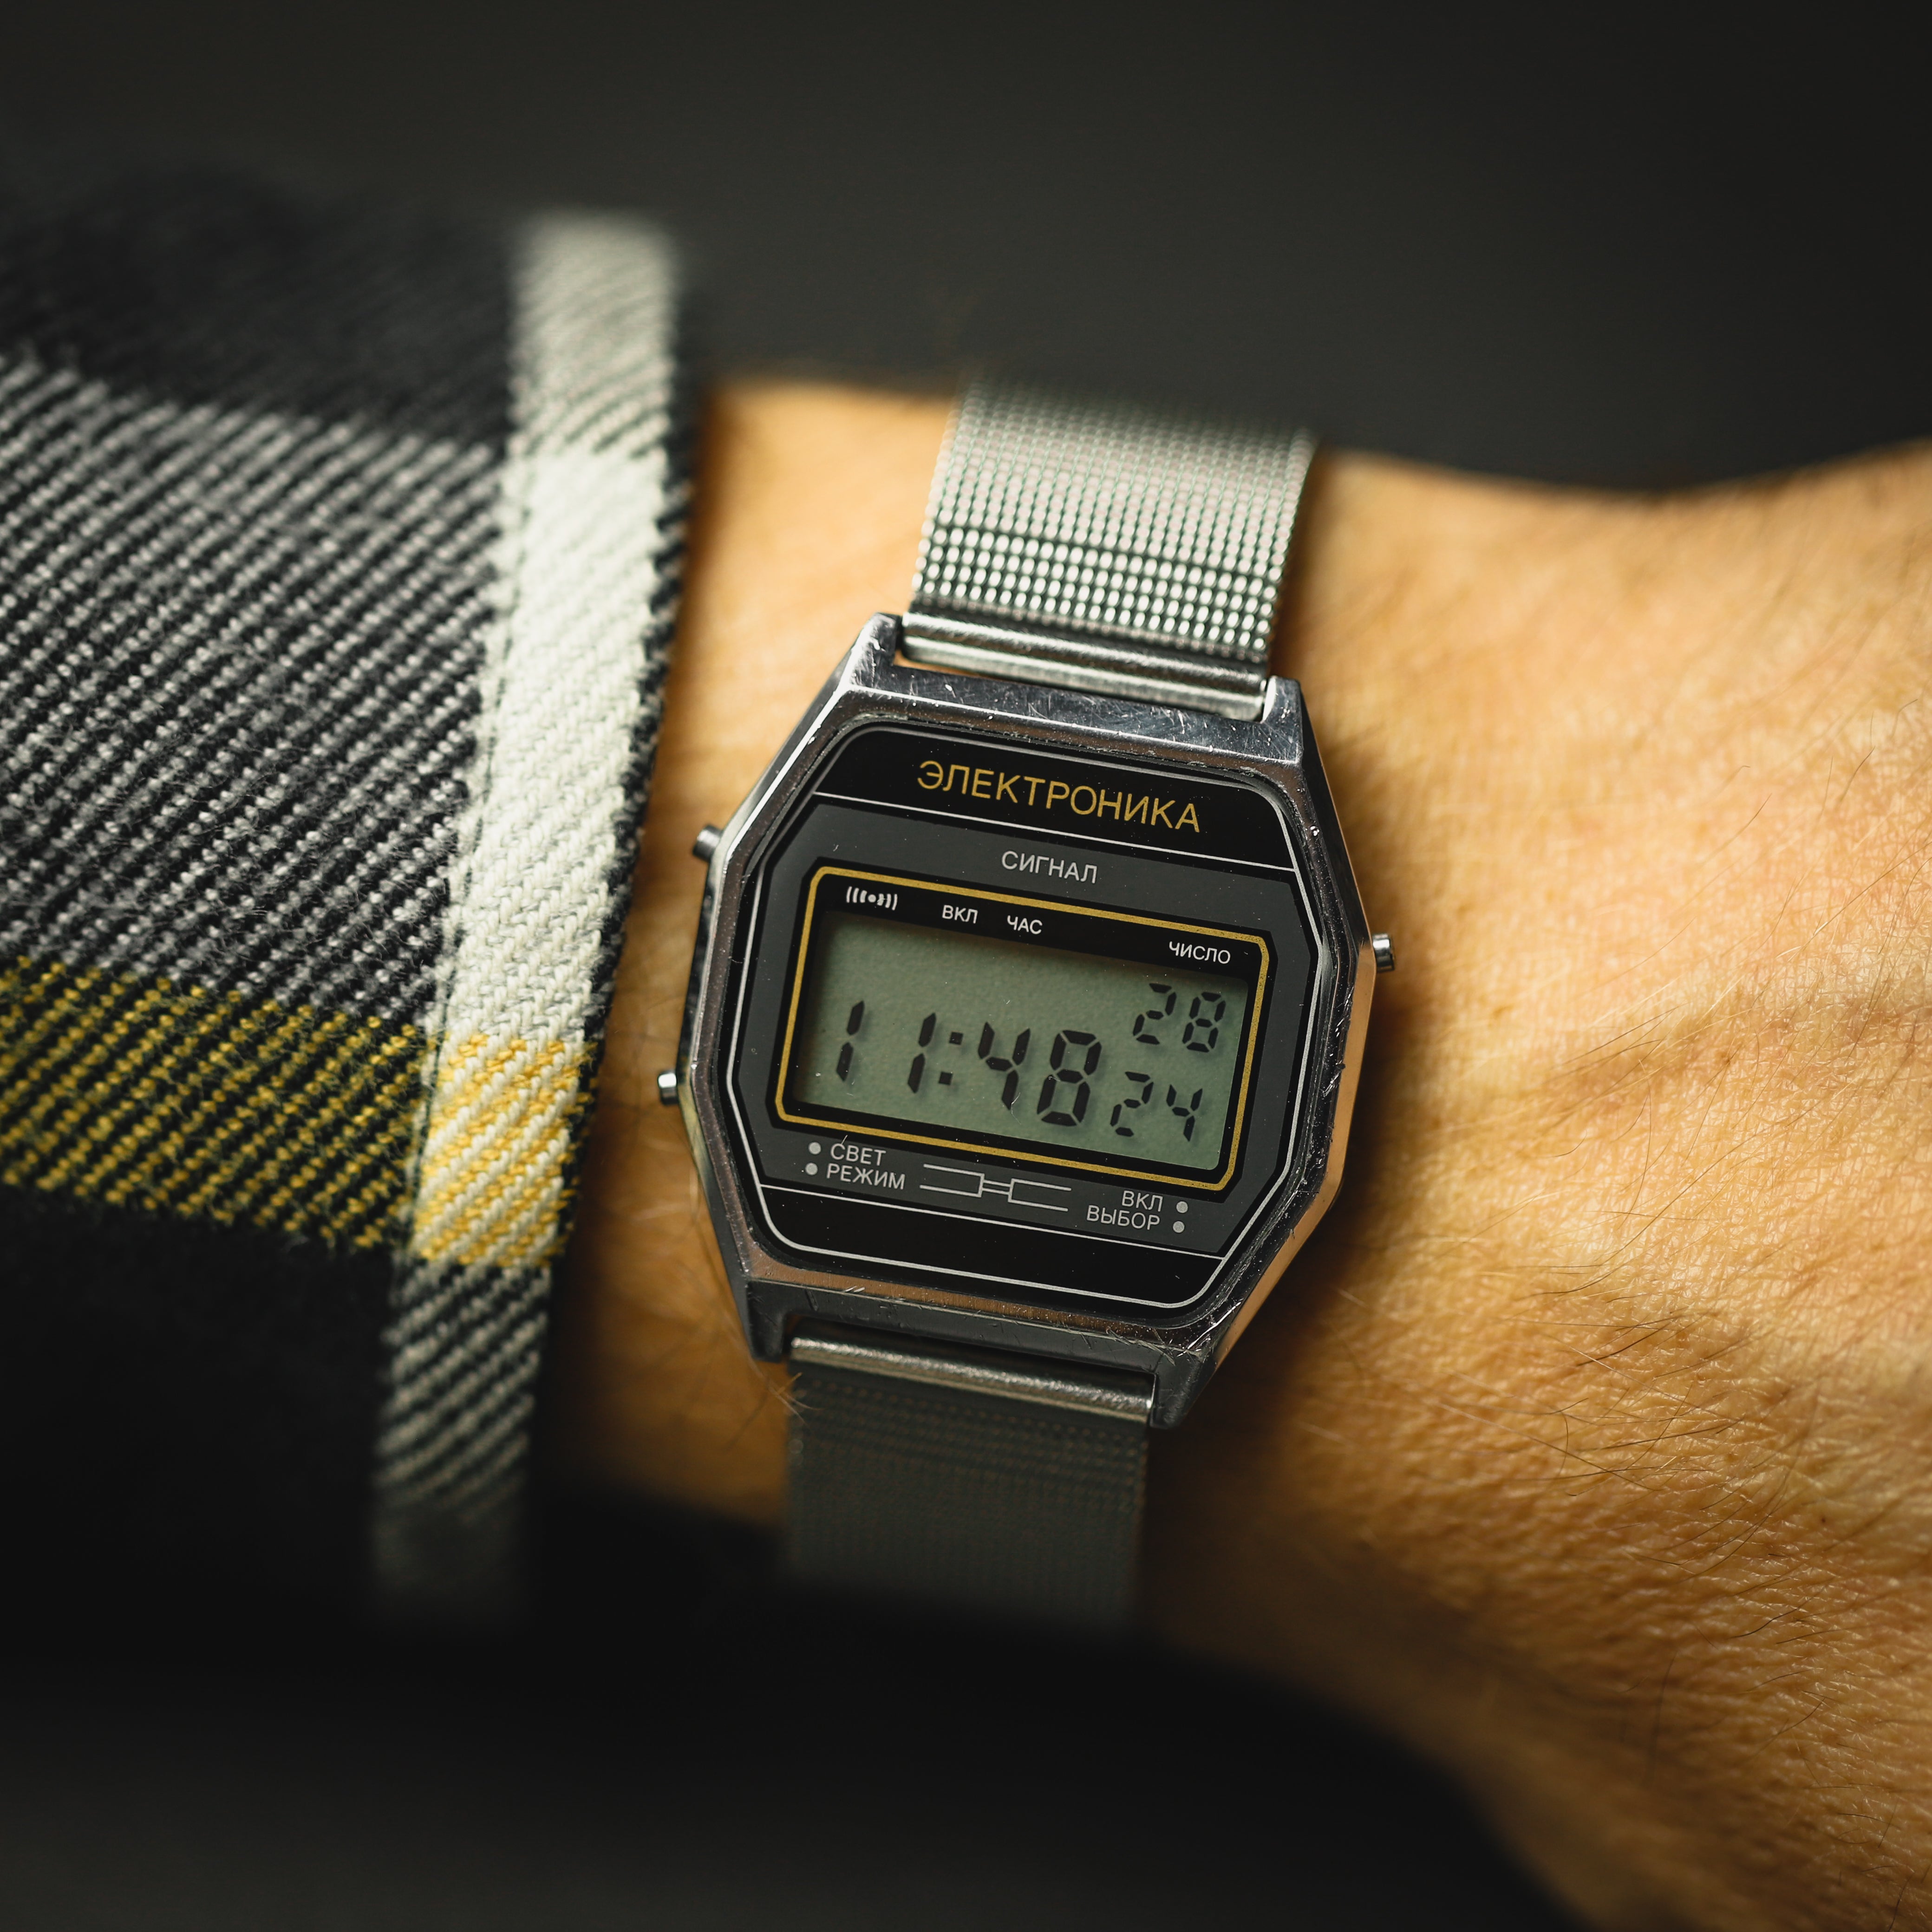 Vintage digital watch ELECTRONIKA 52B, LCD wristwatch, soviet quartz watch, sports gifts, USSR watch, electronic wristwatch, soviet watches